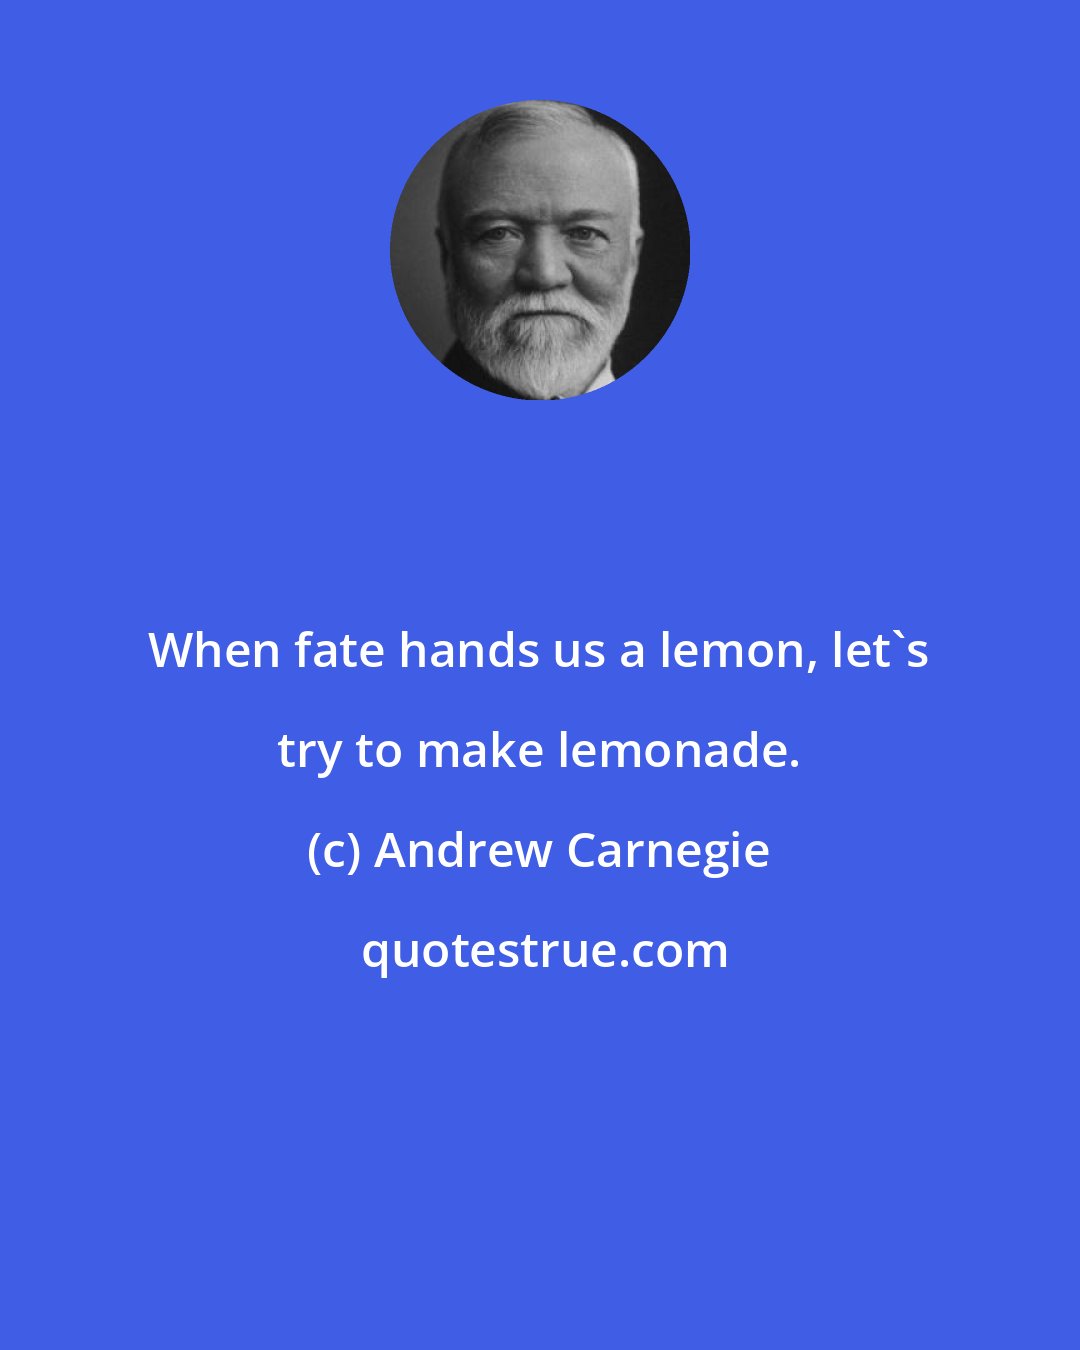 Andrew Carnegie: When fate hands us a lemon, let's try to make lemonade.